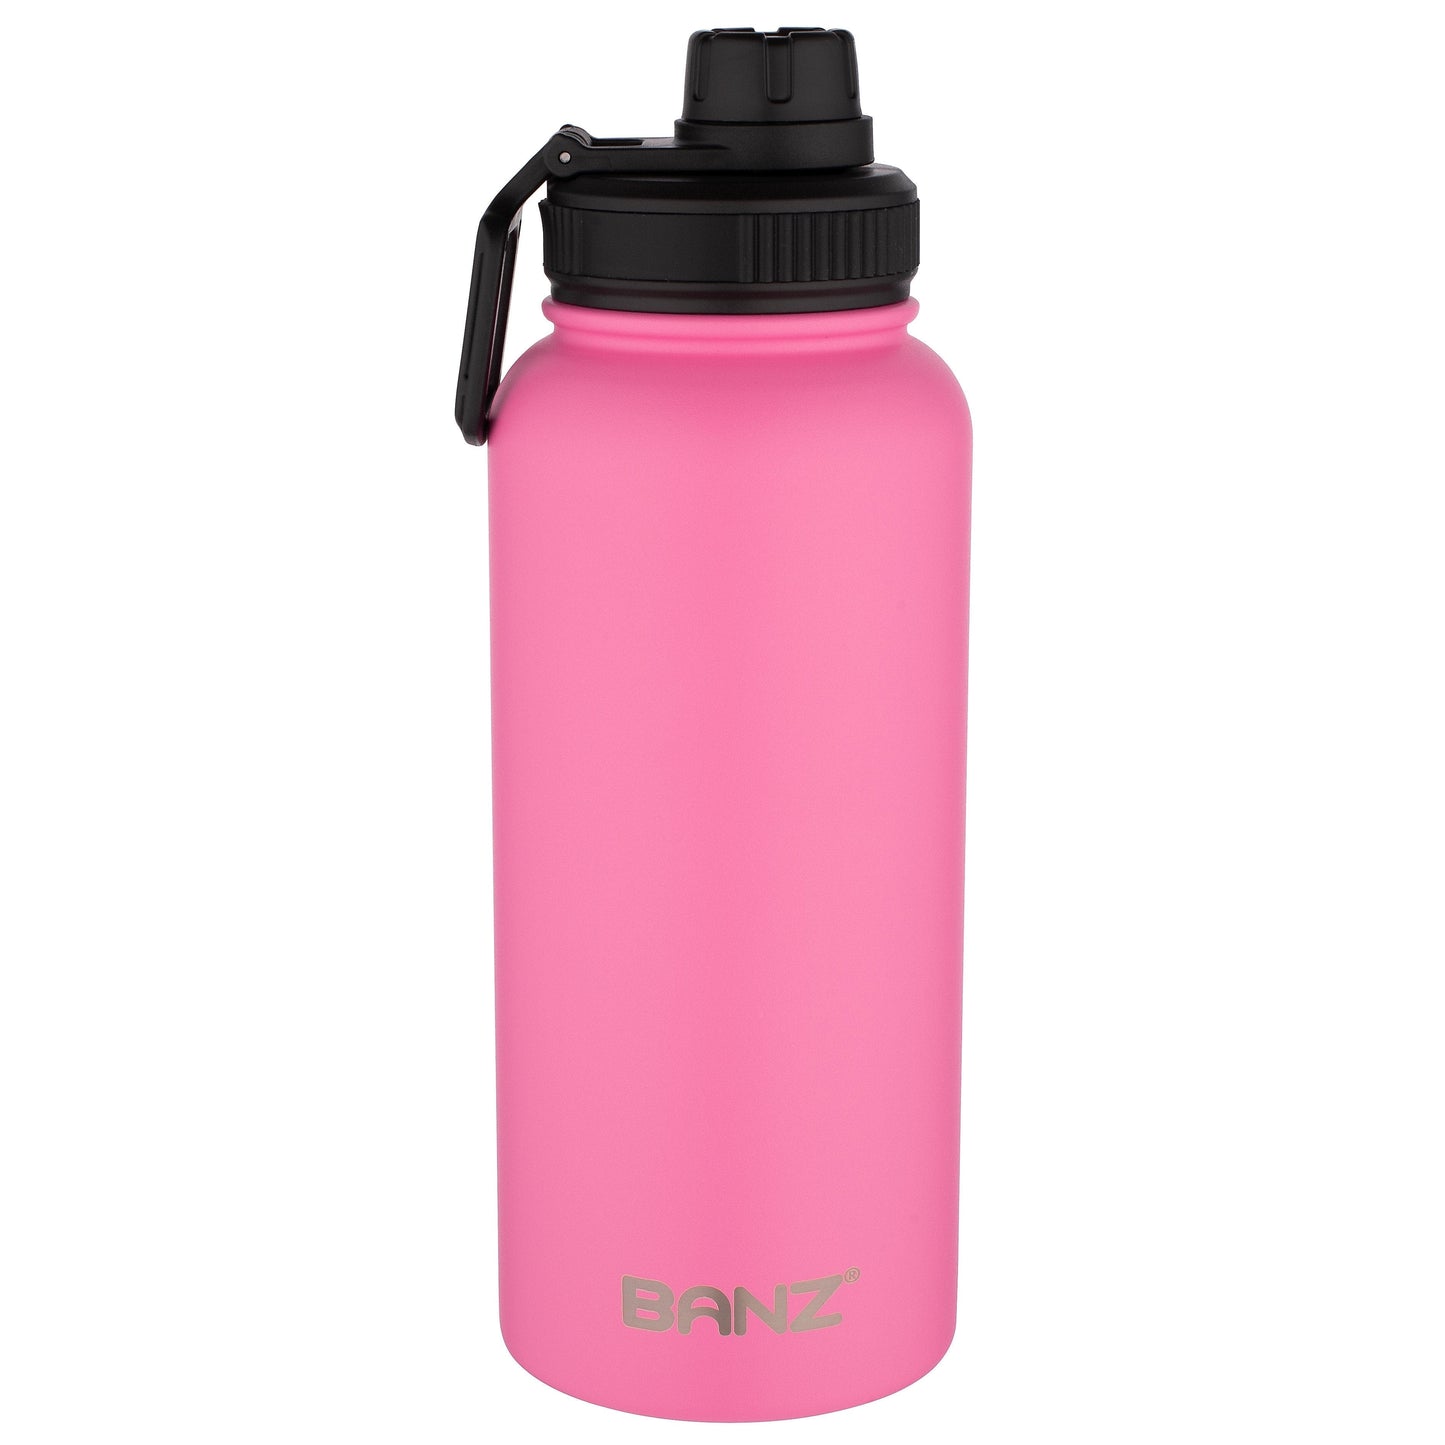 BANZ Water Bottles Water Bottle Water Bottle / Wildflower Pink